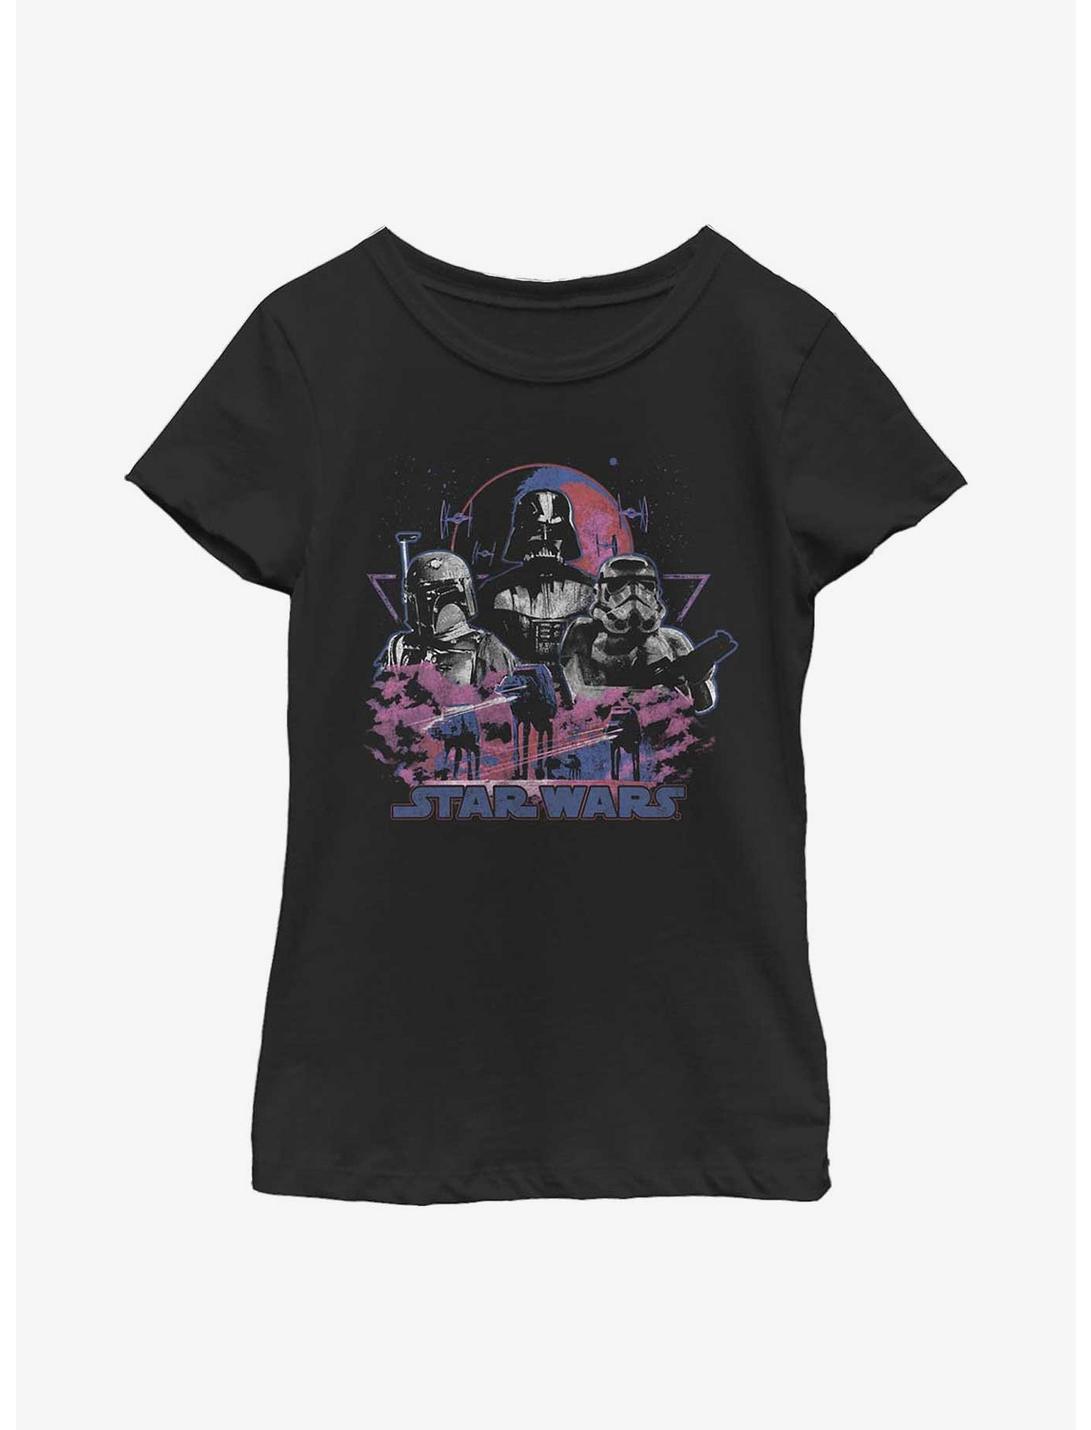 Star Wars The Empire Strikes Back Vintage Youth Girls T-Shirt, BLACK, hi-res